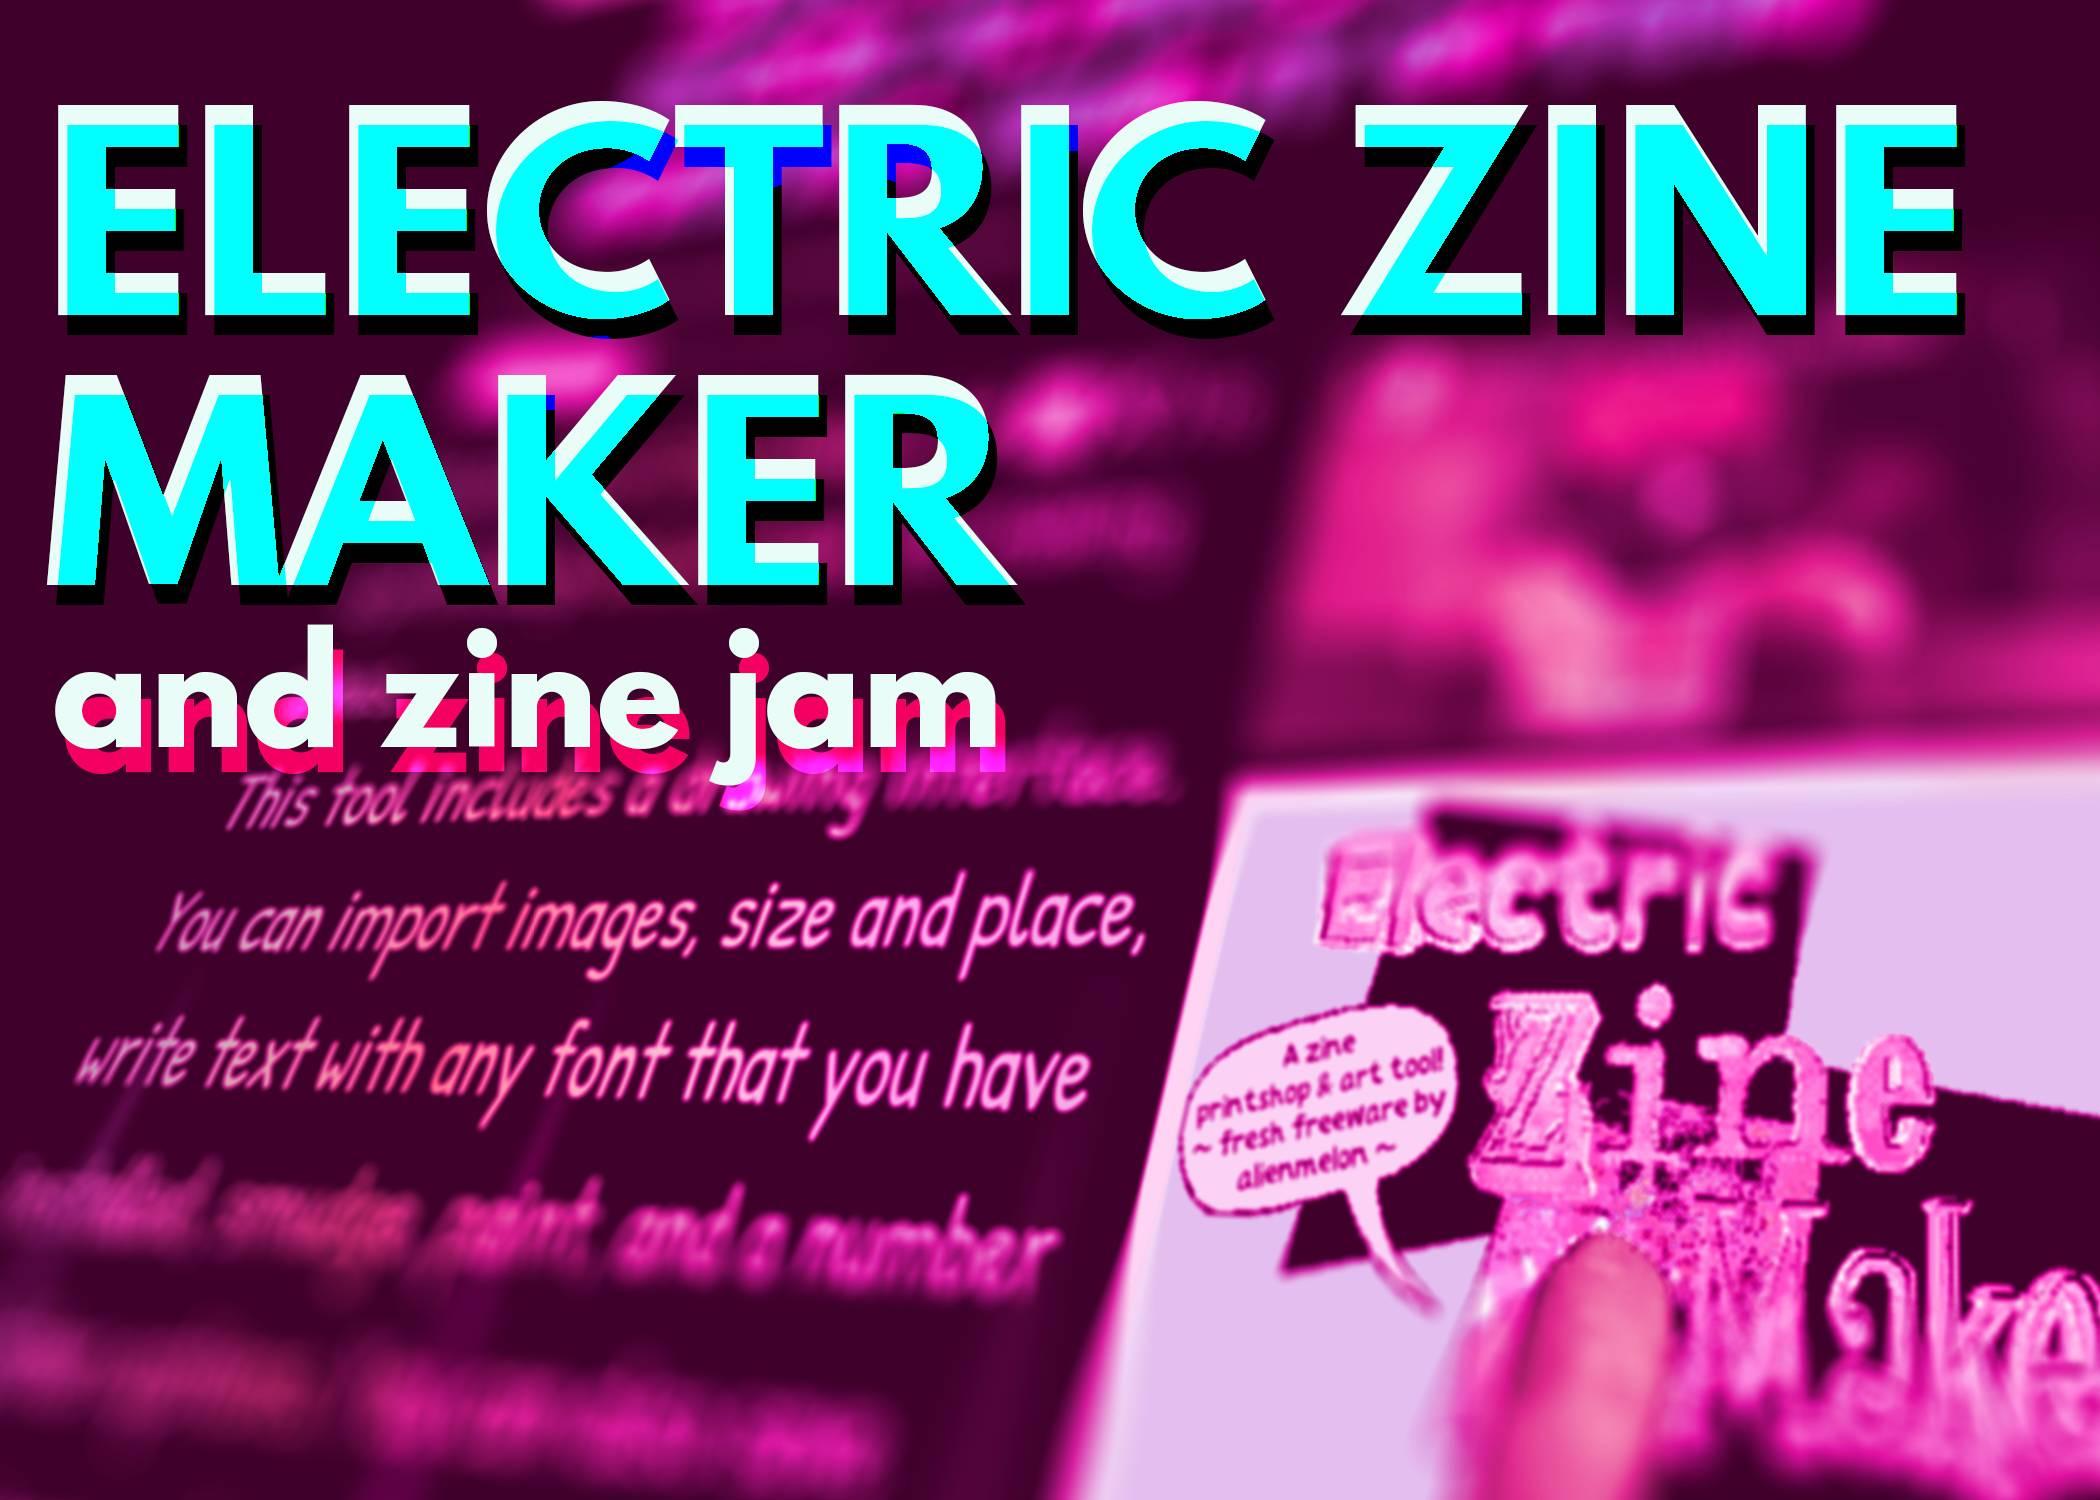 Electric Zine Maker and zine jam